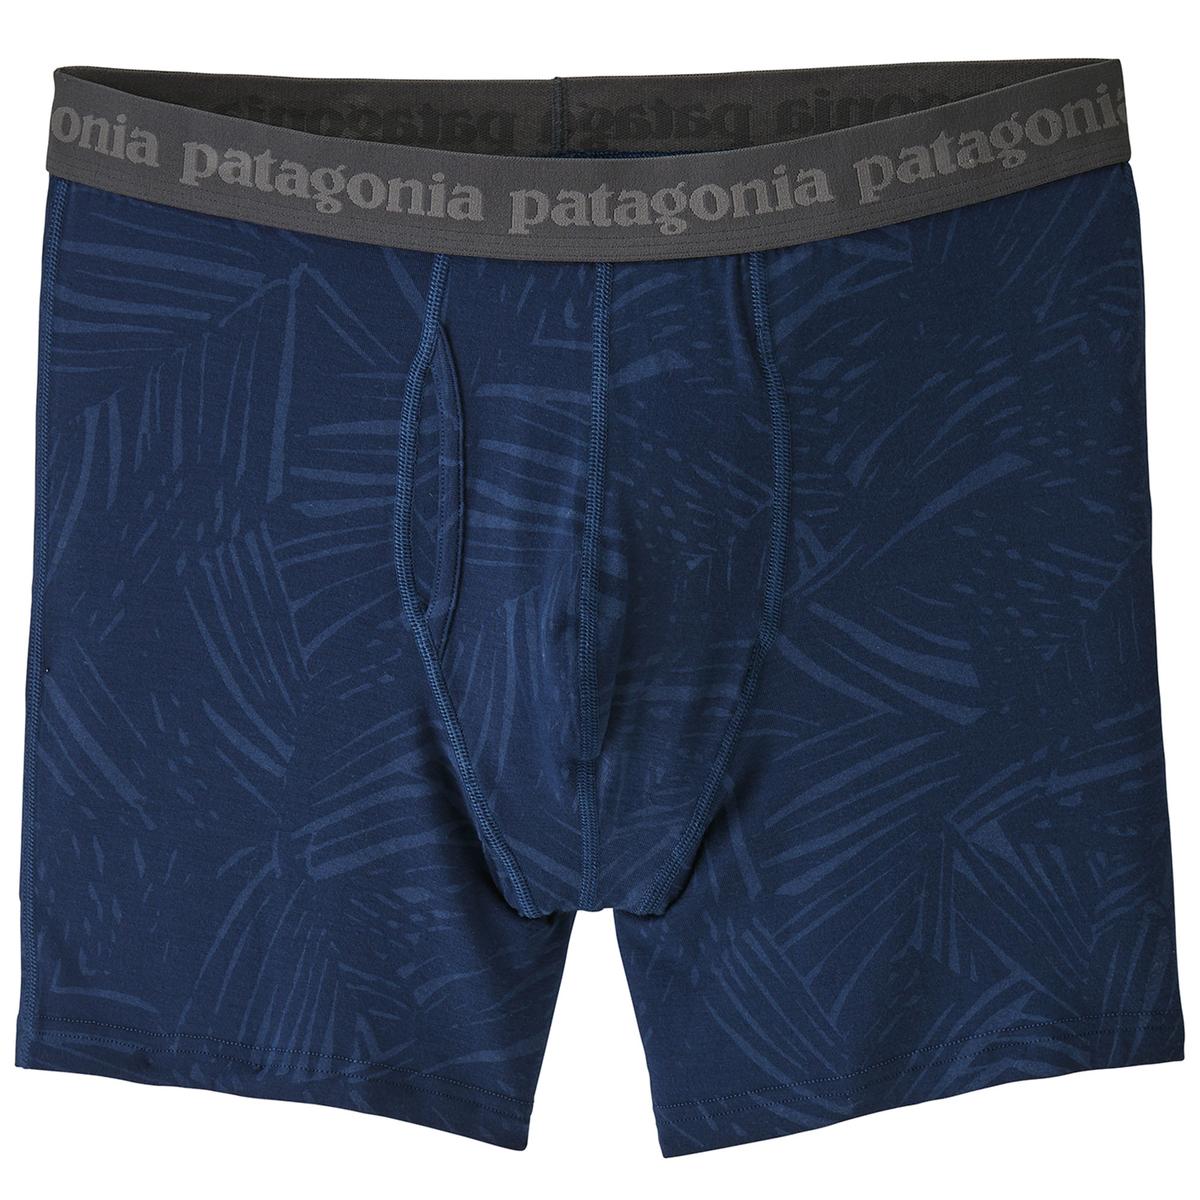 PatagoniaSender Boxer Briefs, 6 Inseam - Mens